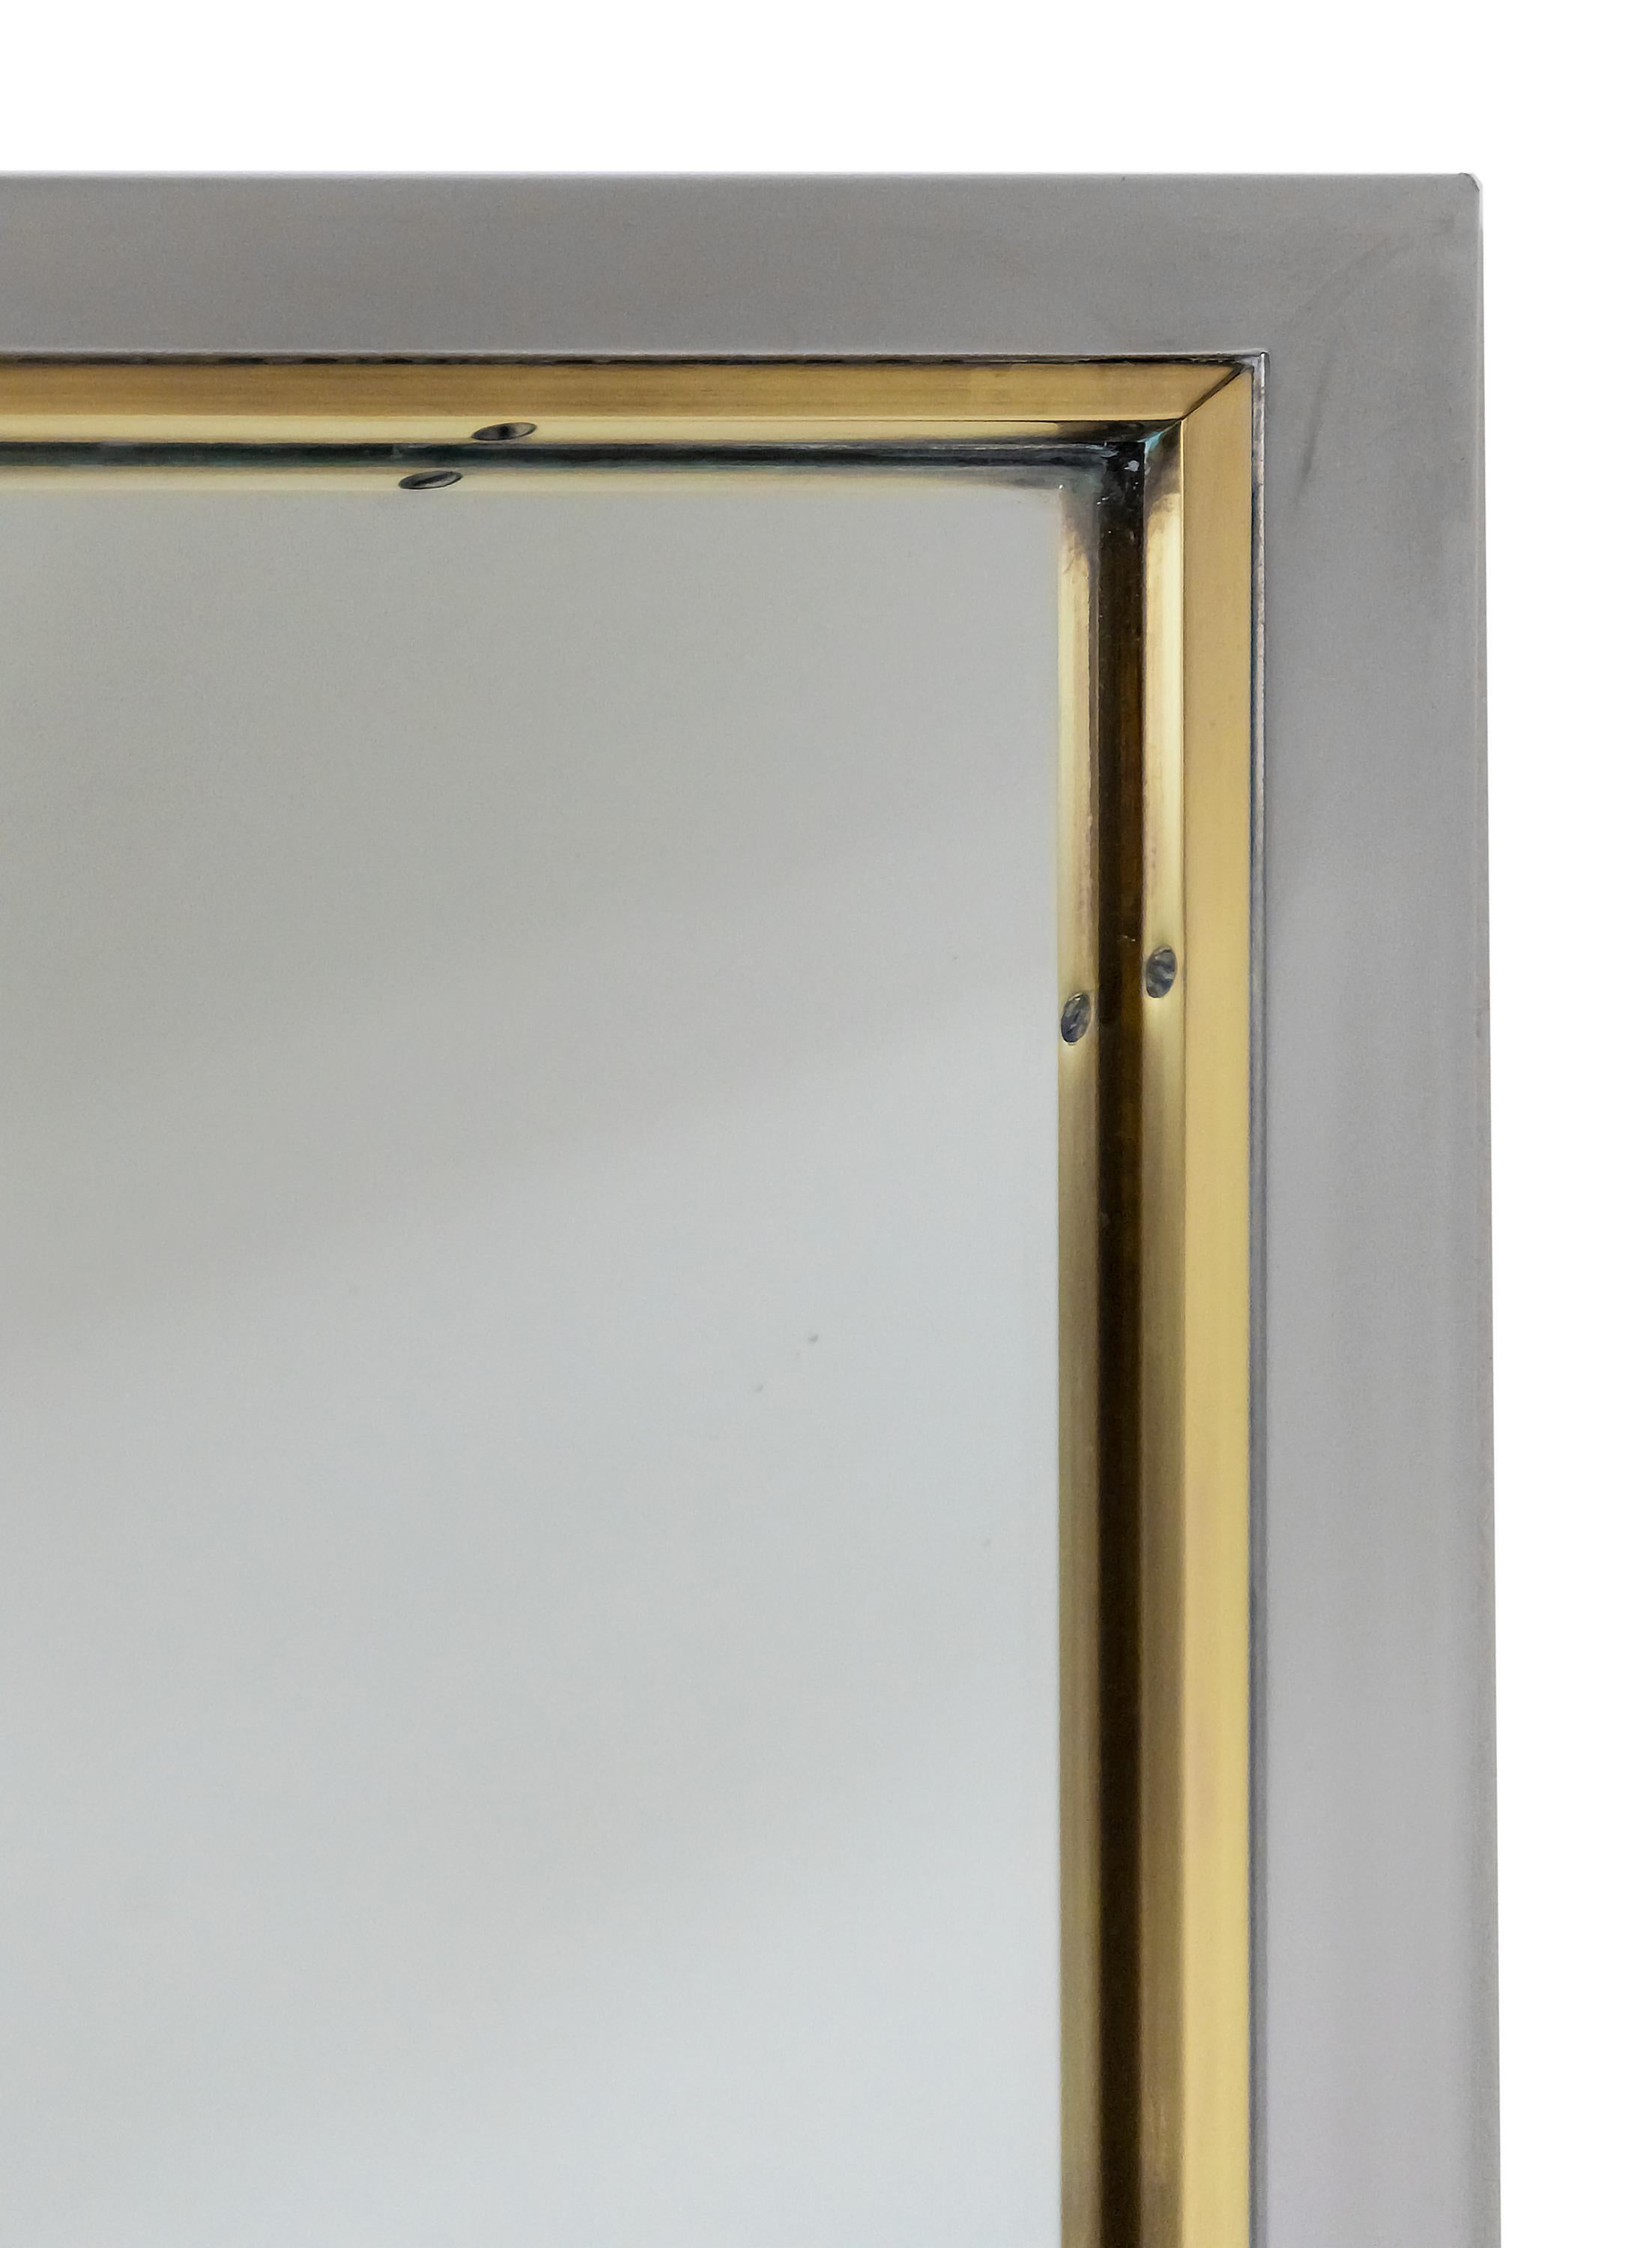 Italian midcentury chrome and brass frame wall mirror.



